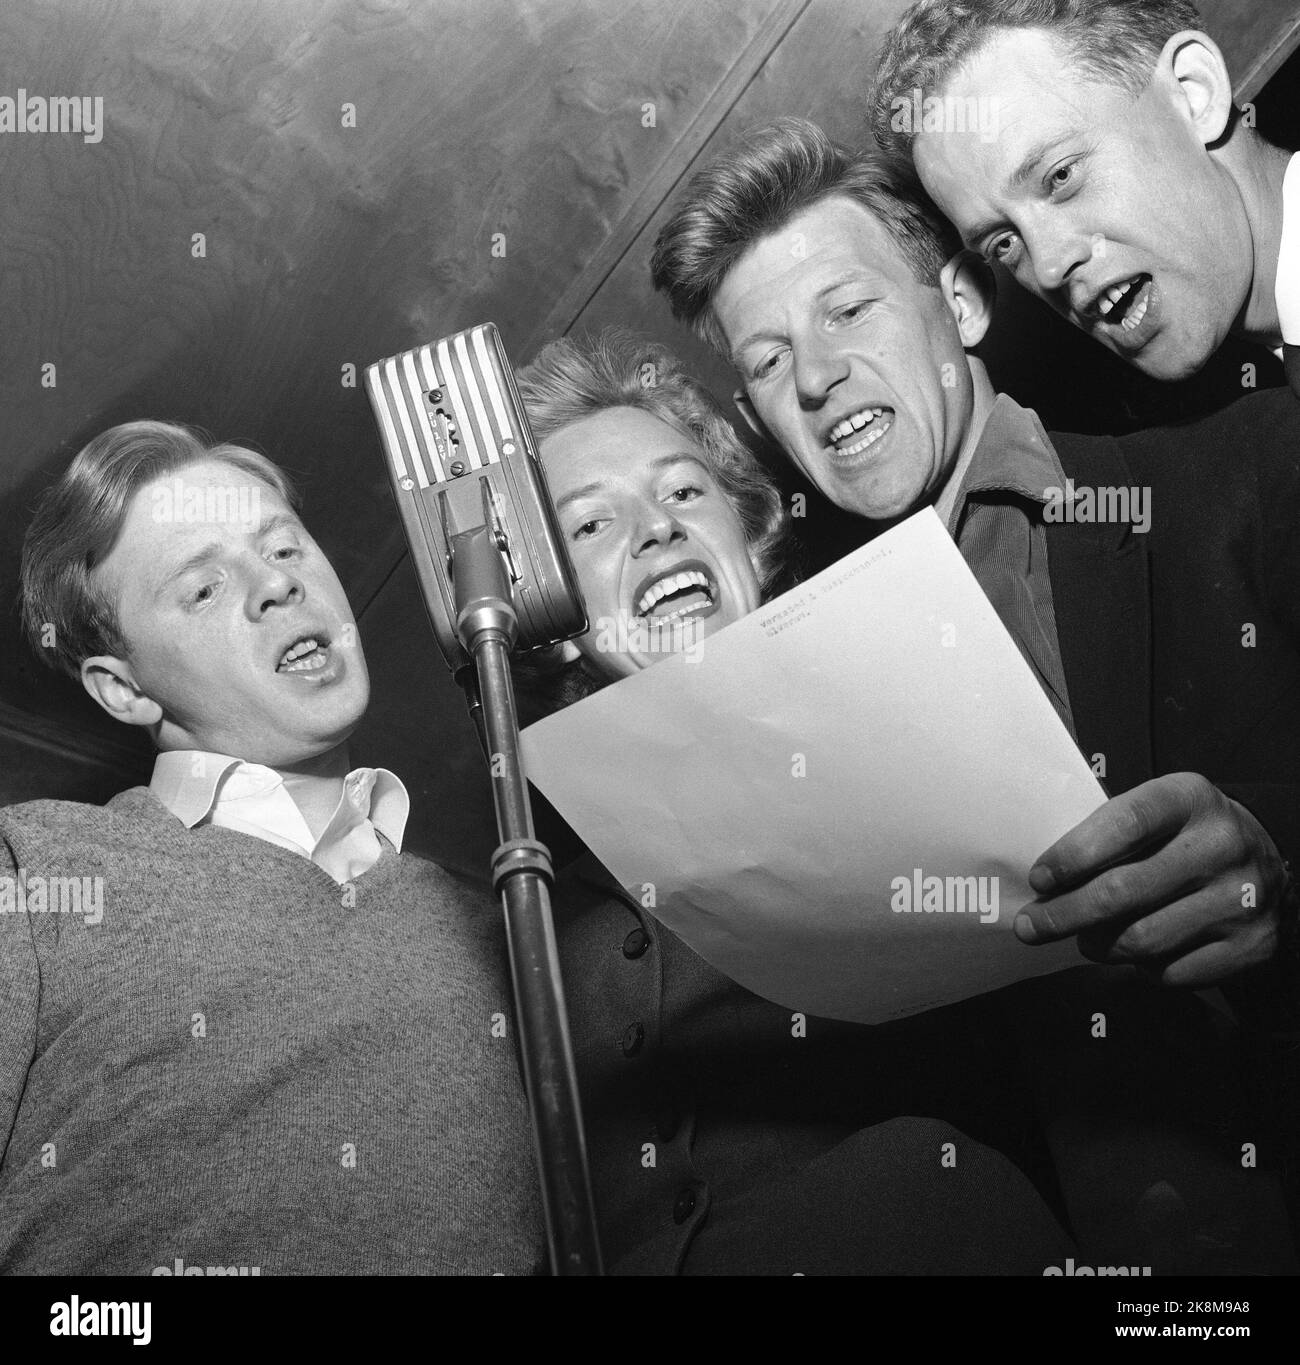 Oslo, 18. Mai 1957. „The Monn-Keys“ macht Rekord. Hier während der Aufnahme eines Songs. Aus Richtung v. See: Arne Bendiksen, Sølvi Wang, per Asplin und Oddvar Sanne. Musikstudio. Foto; Sverre A. Børretzen / Aktuell / NTB. Stockfoto